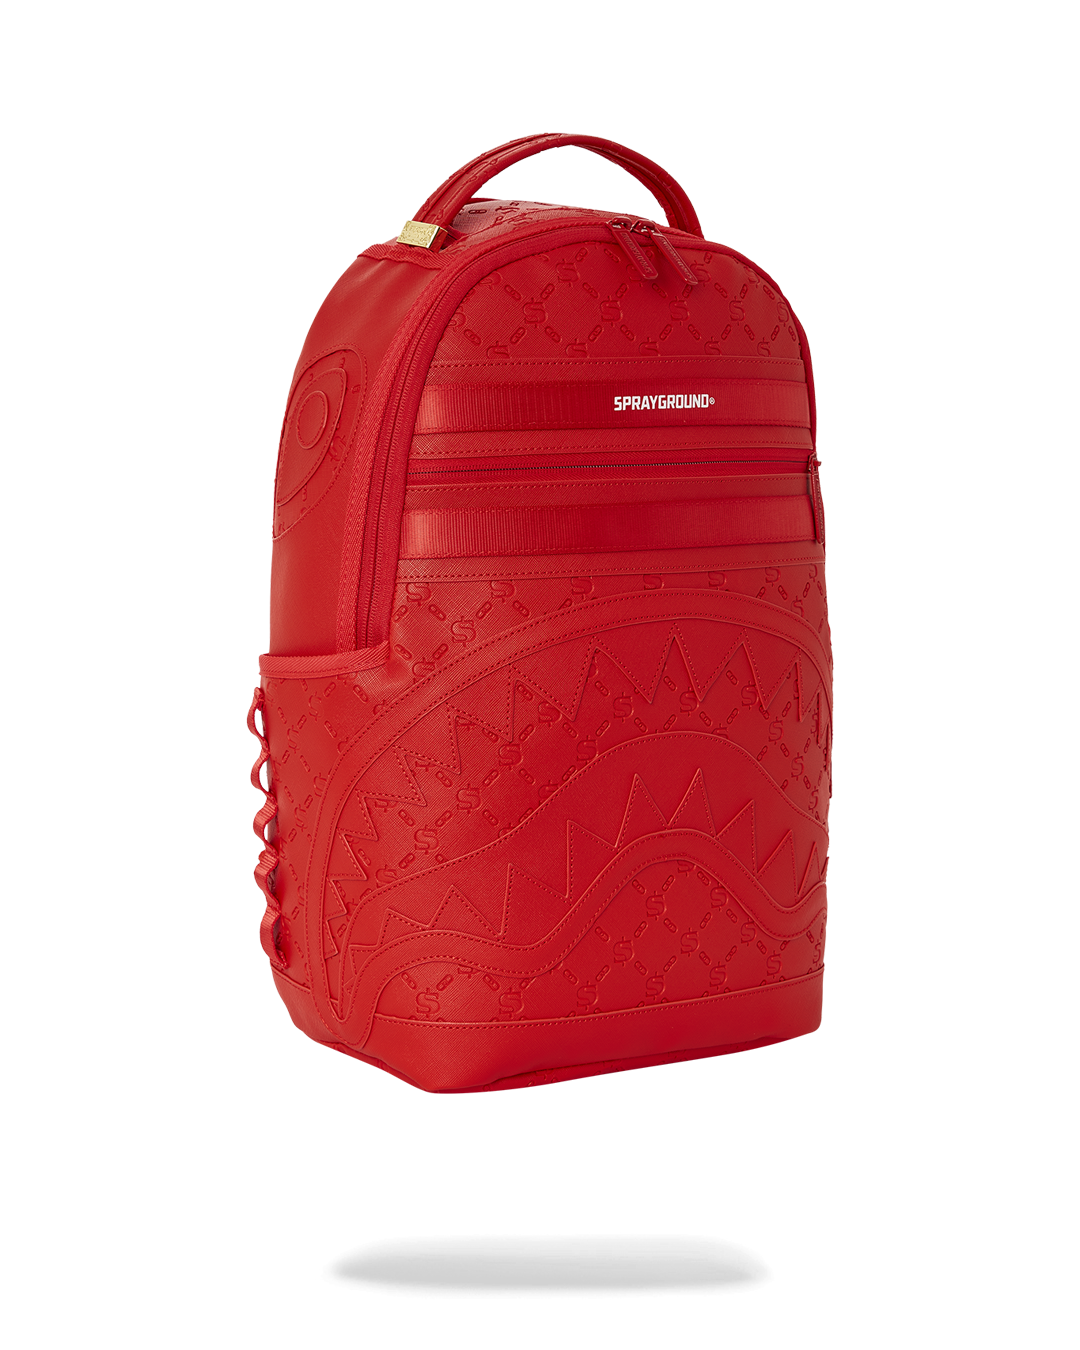 Sprayground Raceway Dlxvf Backpack in Red for Men